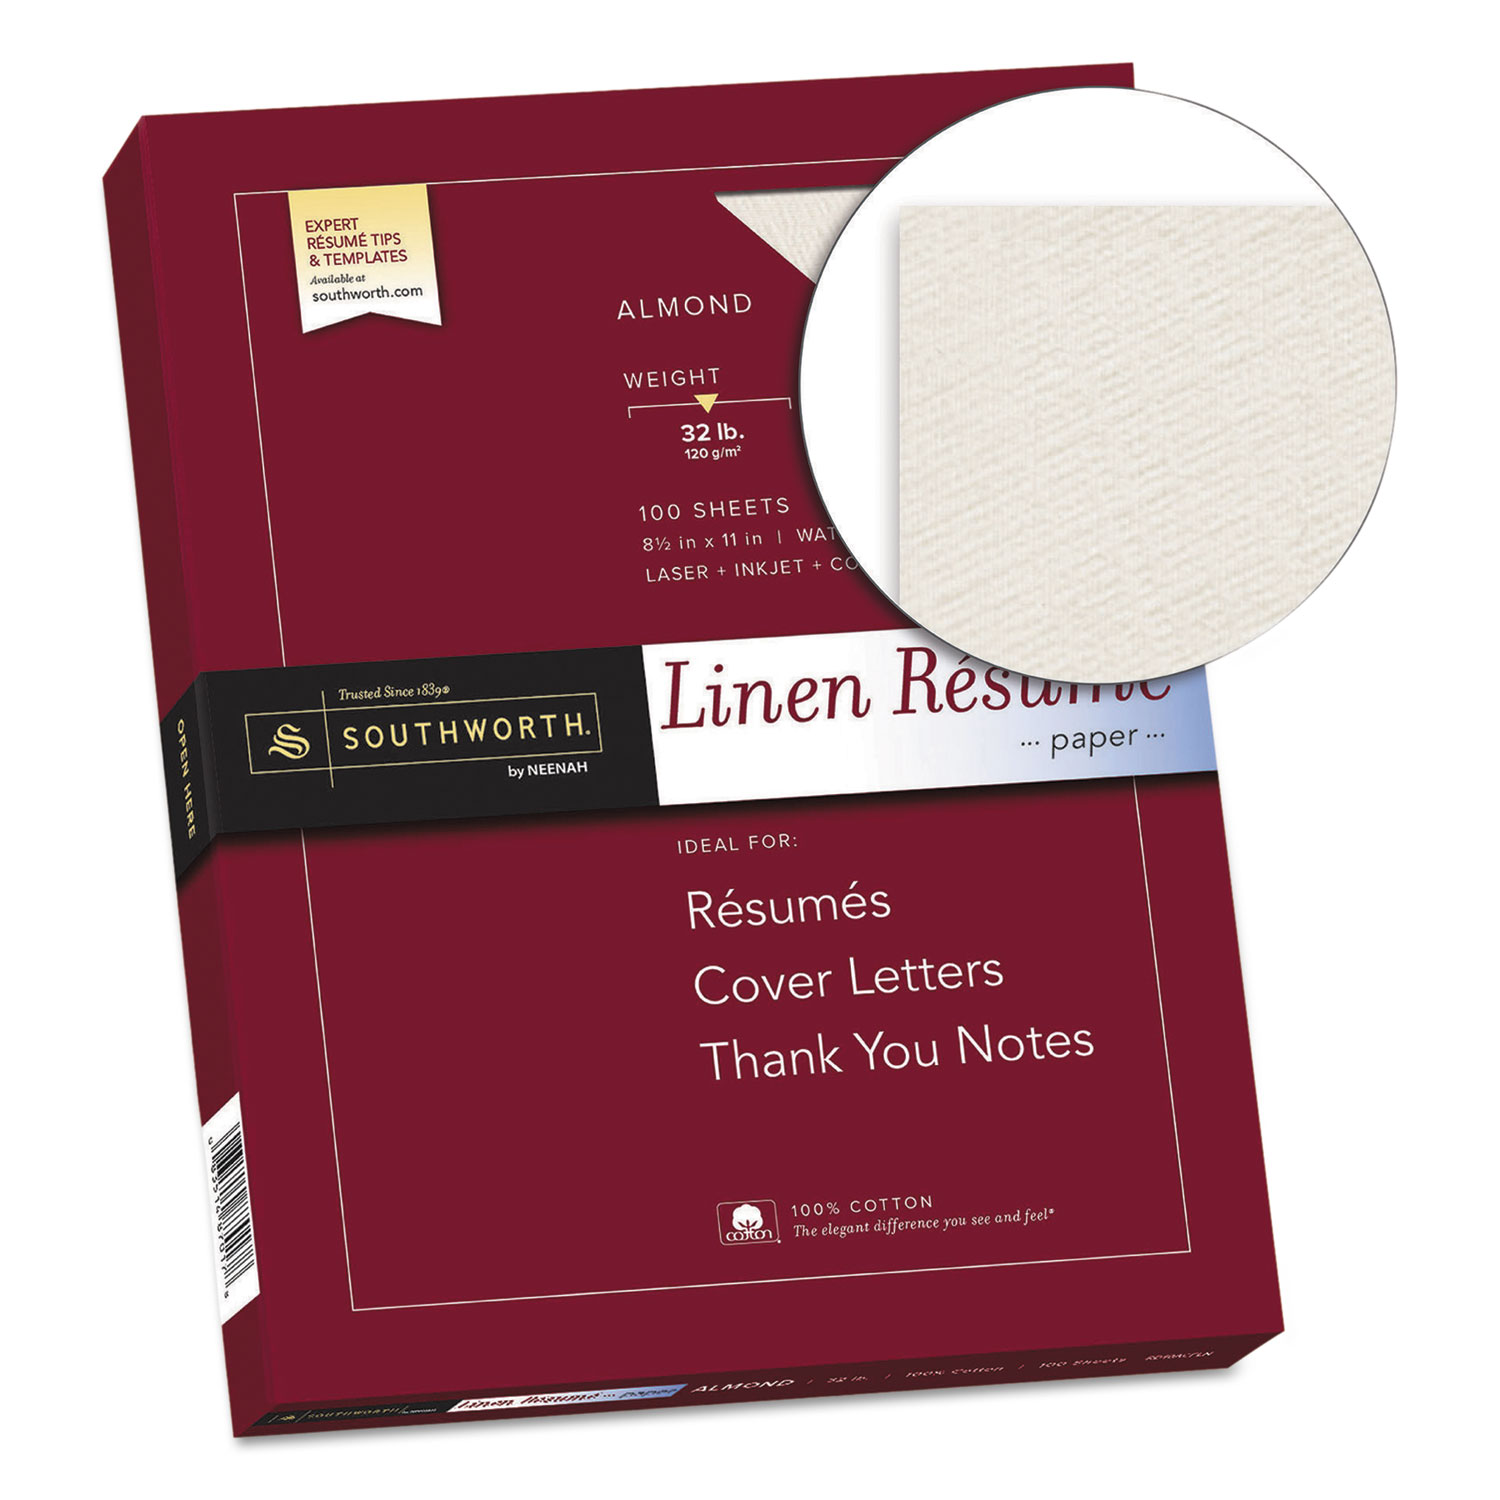 100% Cotton Linen Resume Paper, 32lb, 8 1/2 x 11, Almond, 100 Sheets